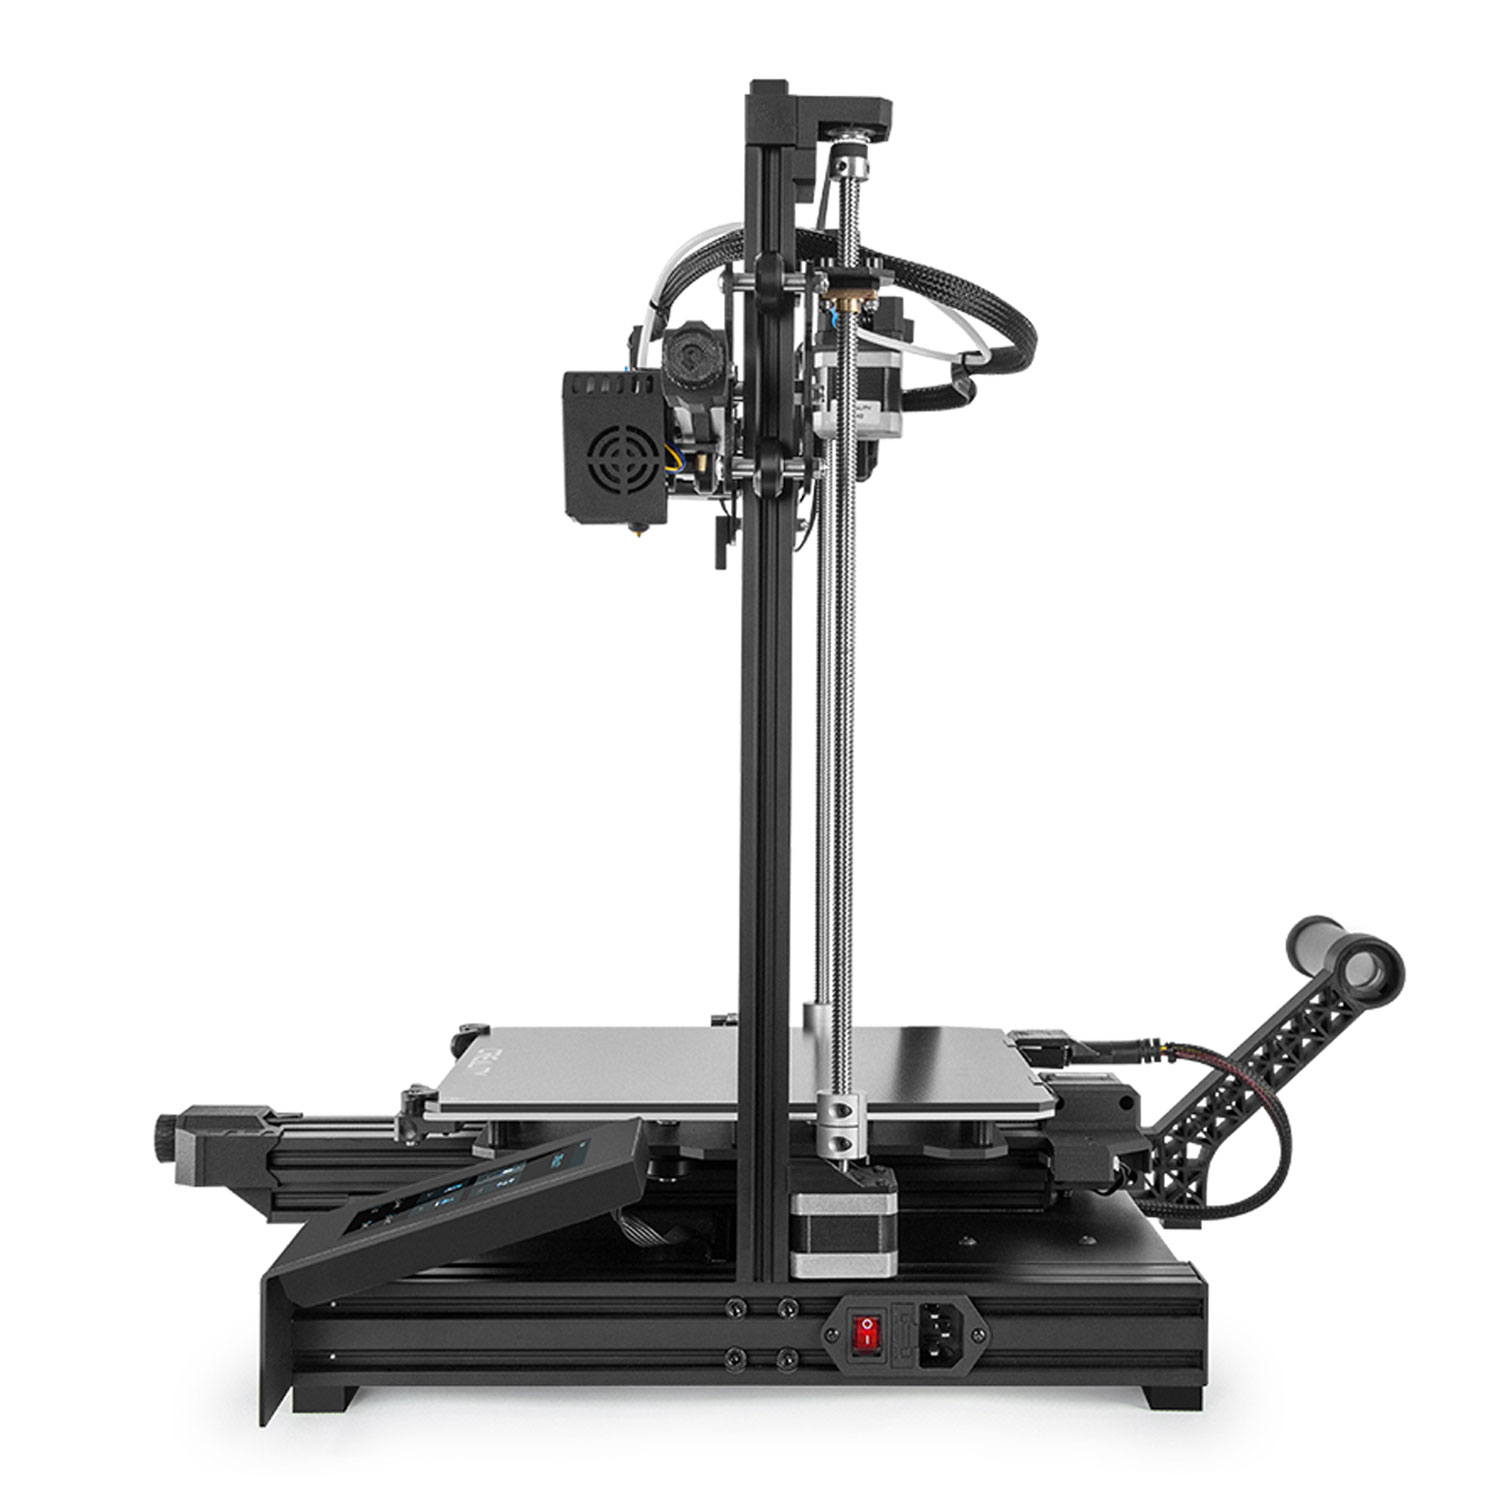 Impressora 3D Creality CR-6 SE (235 x 235 x 250MM)